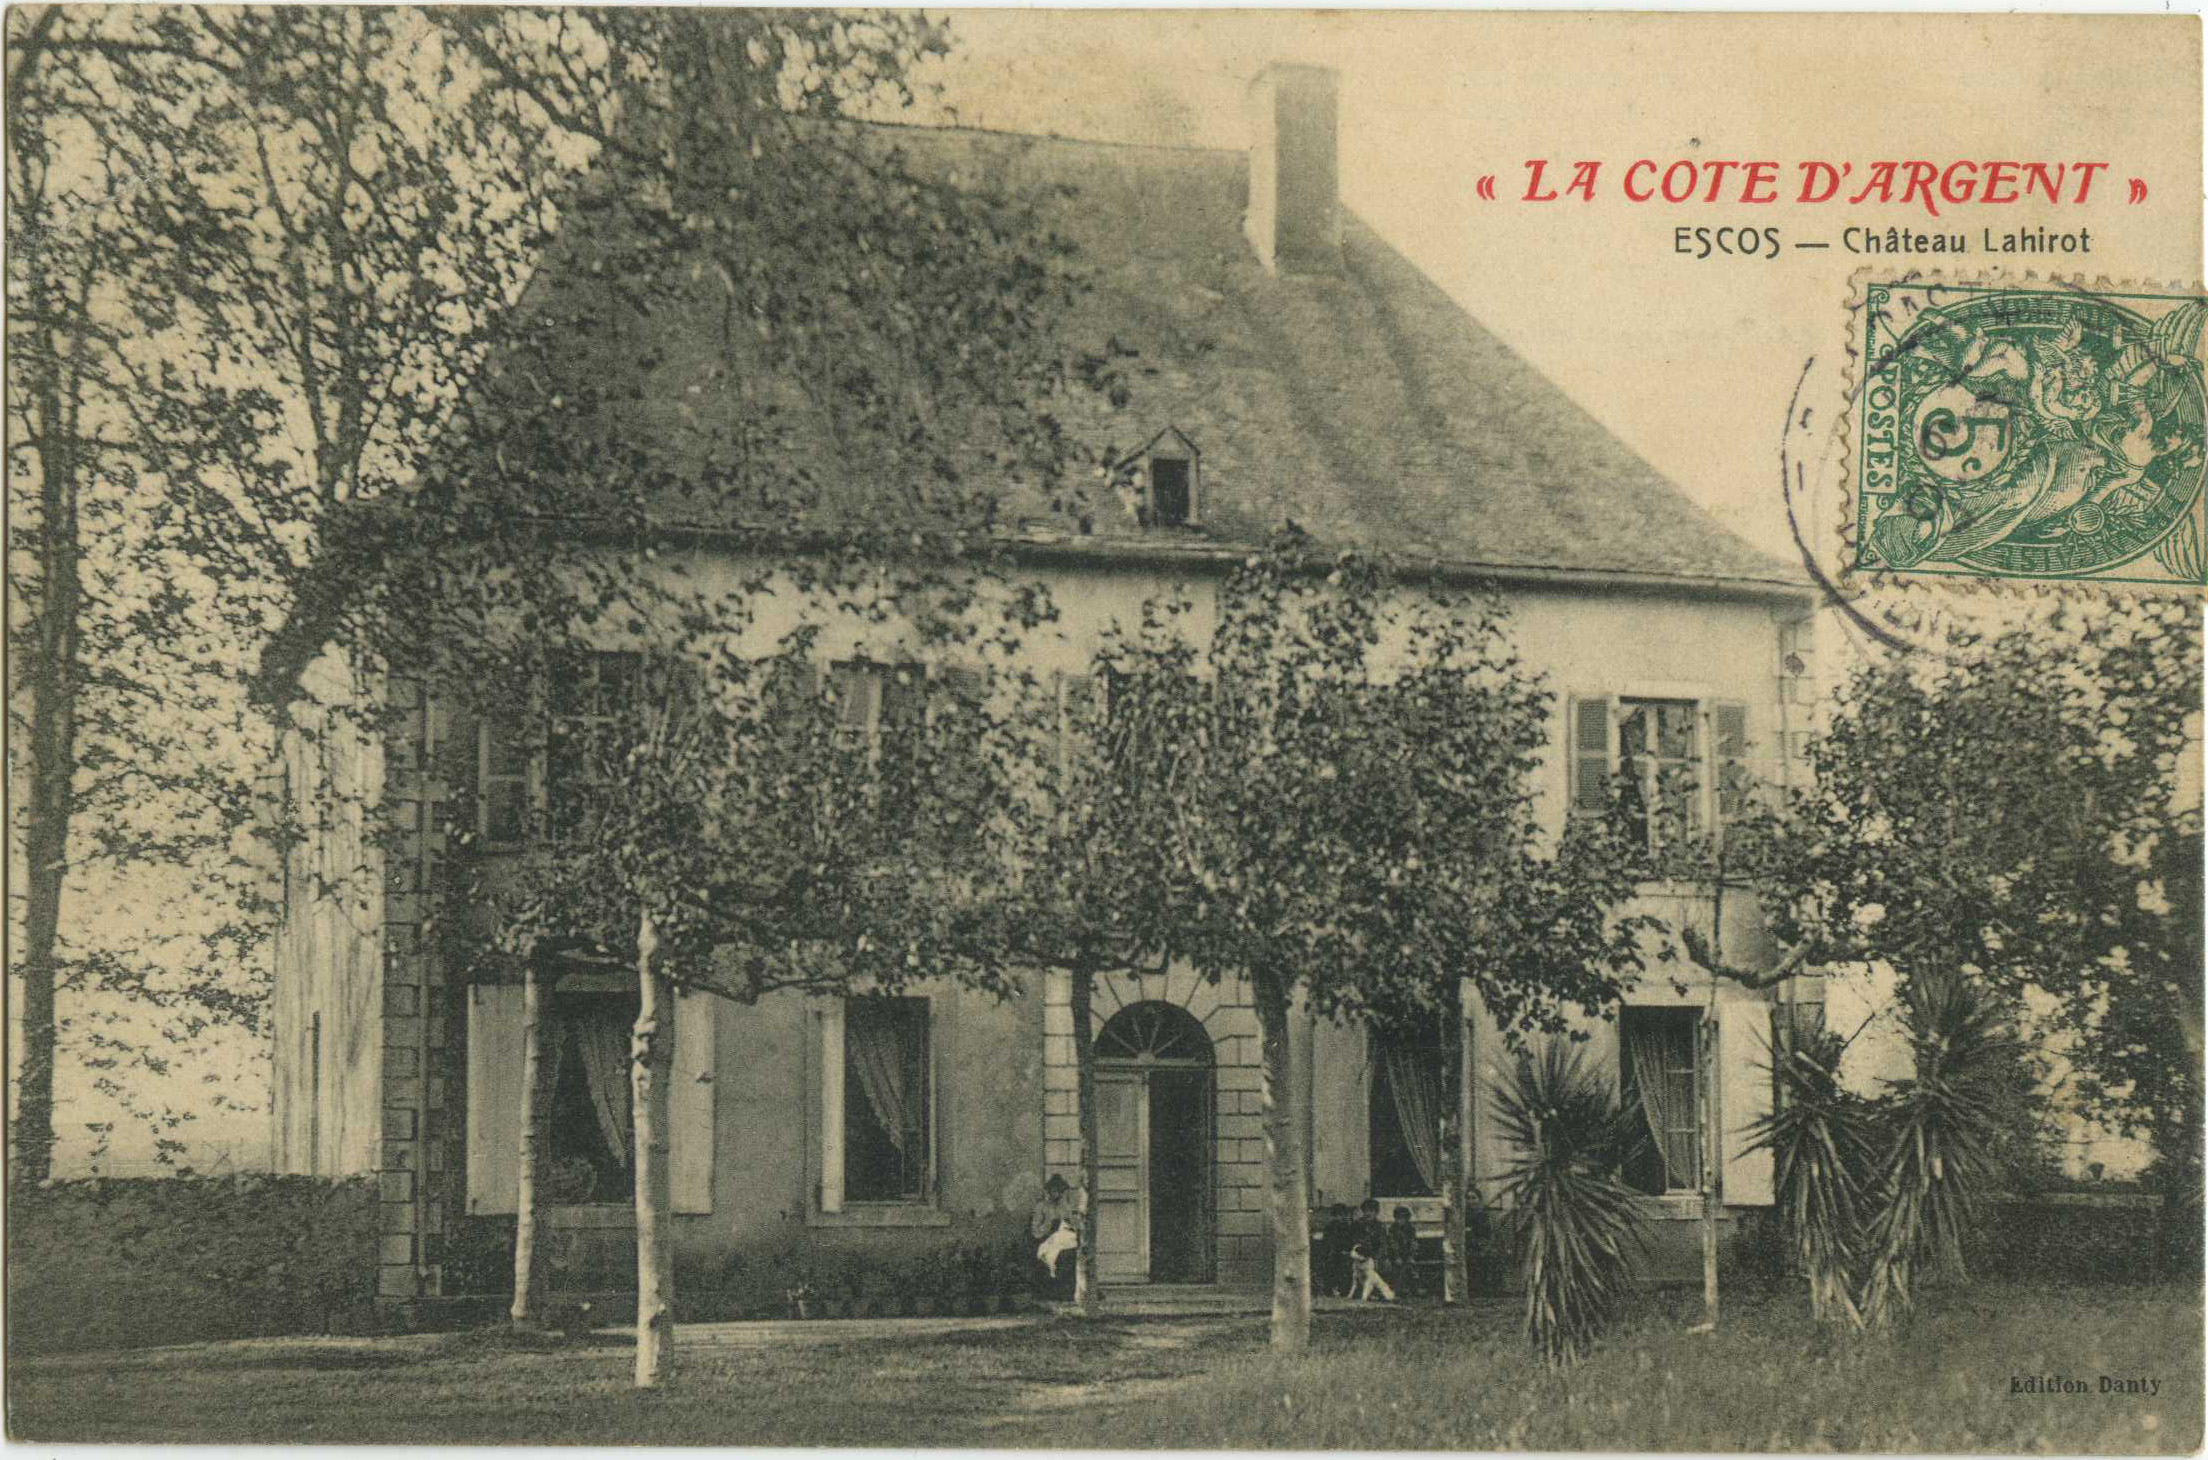 Escos - Château Lahirot